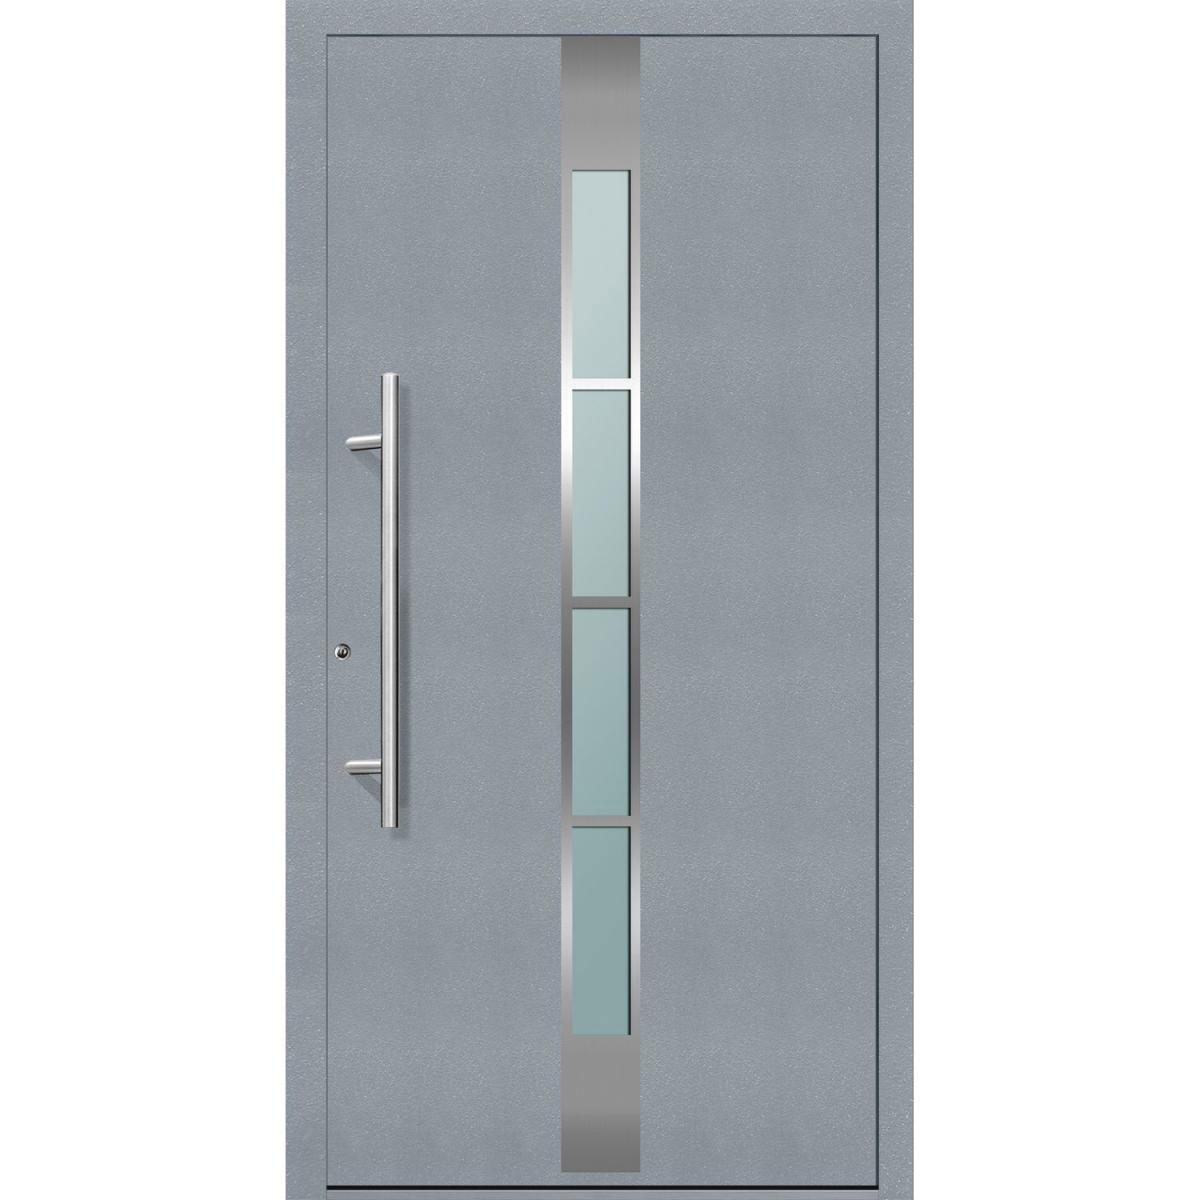 Aluminium Sicherheits-Haustür „Ferrara Exklusiv“, 75mm, grau, 110x210 cm, Anschlag links, inkl. Griffset